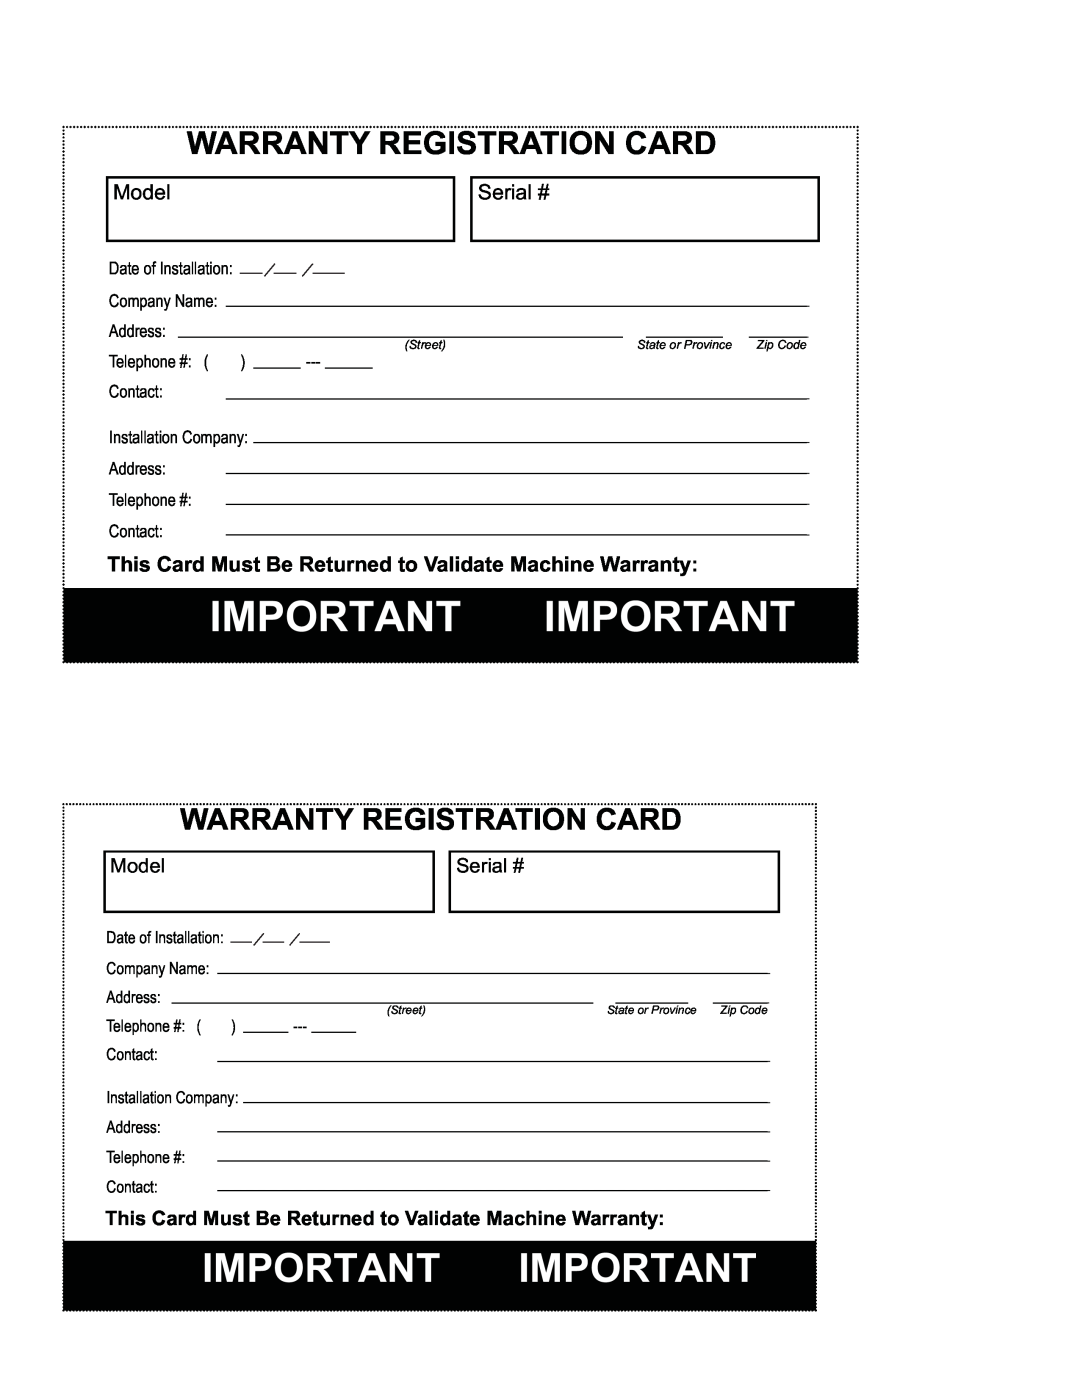 Moyer Diebel 301HT M2 installation manual Warranty Registration Card, Important Important, Model, Serial # 